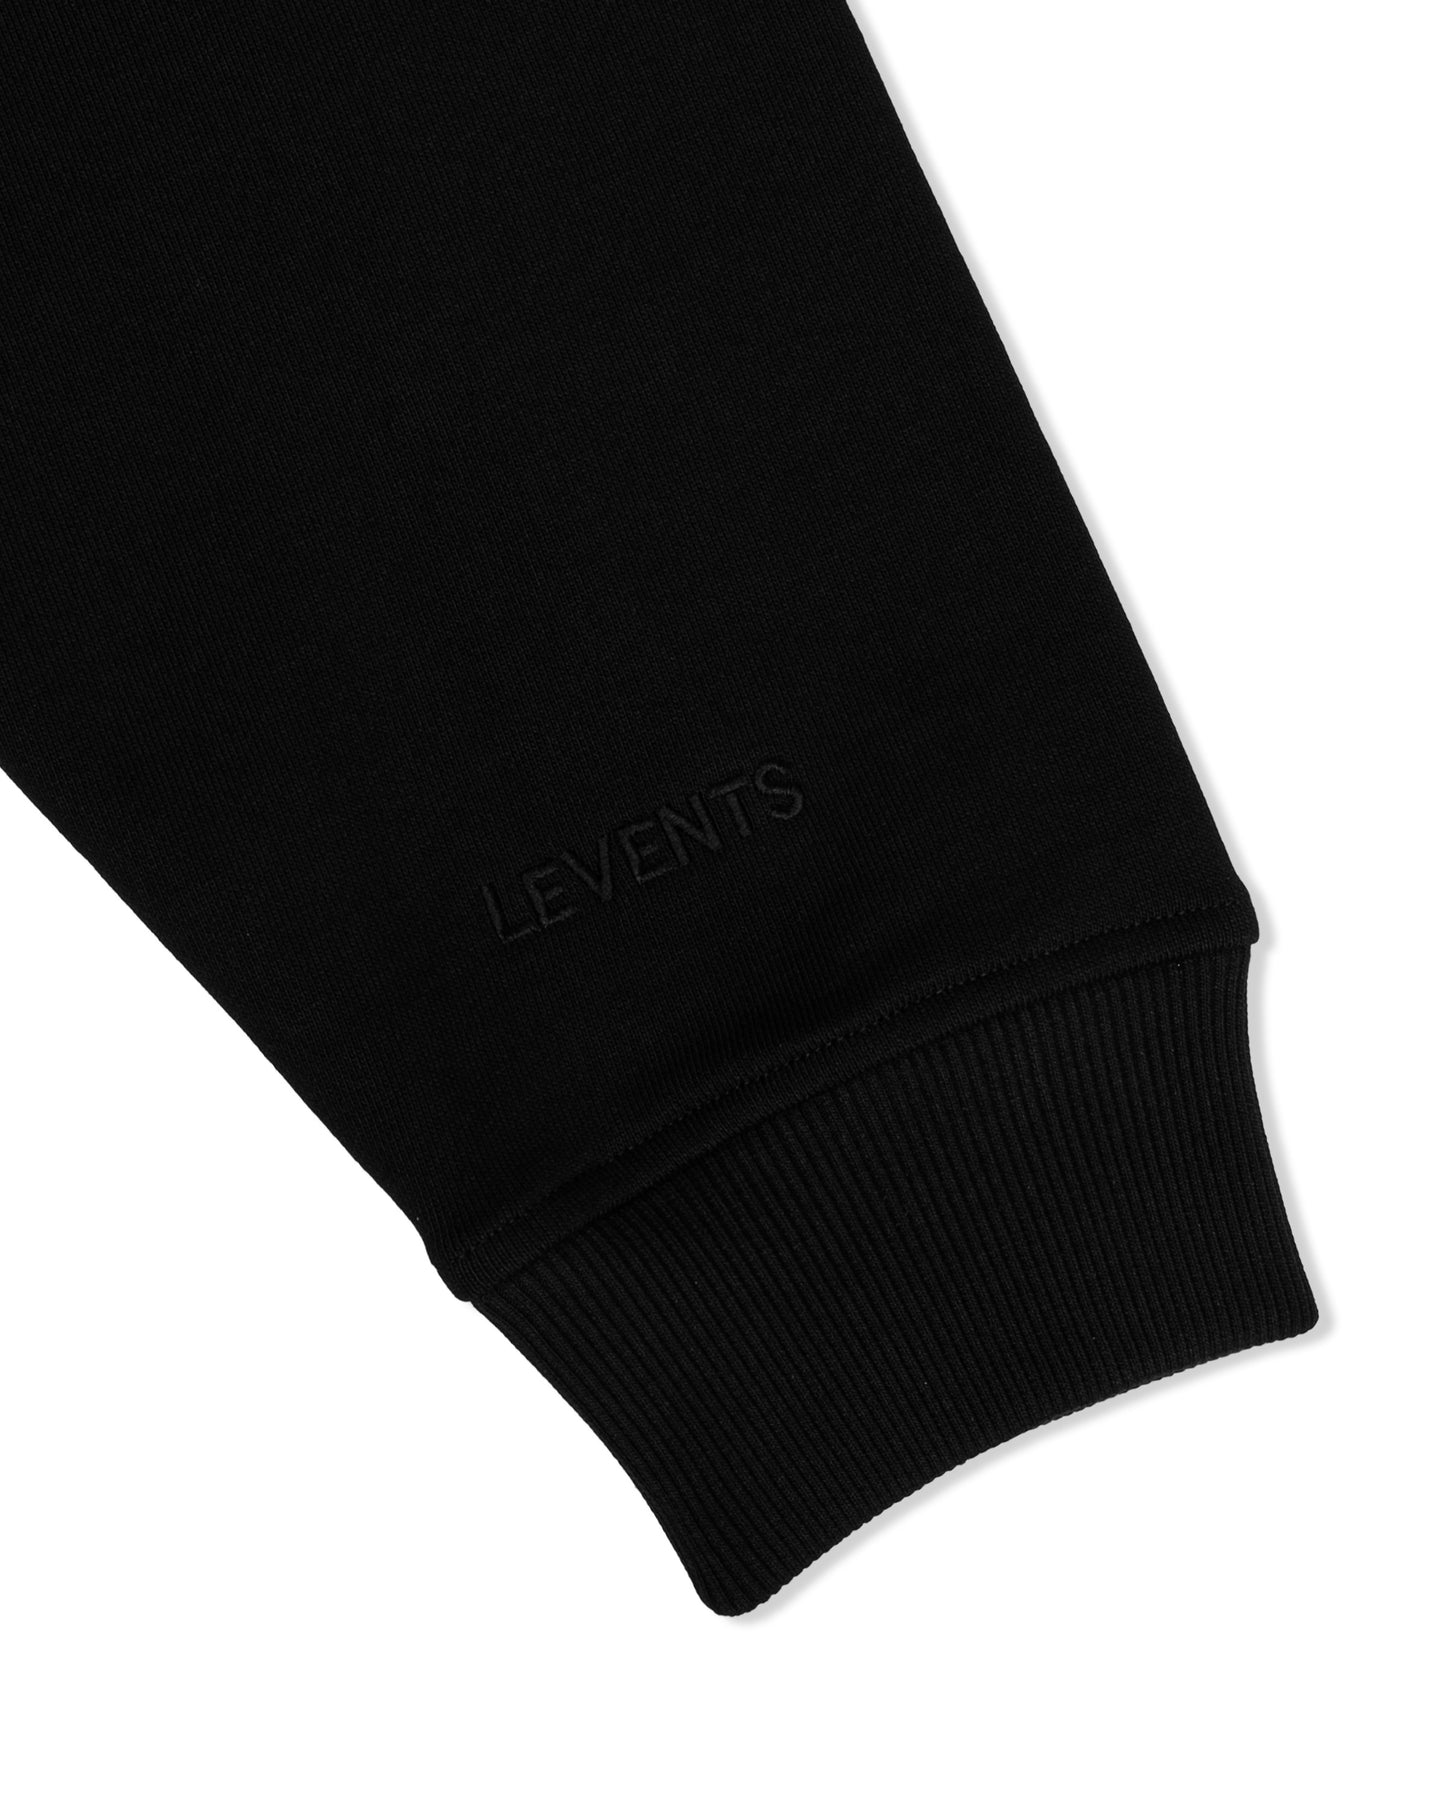 Levents® Love Boxy Zipper Hoodie/ Black